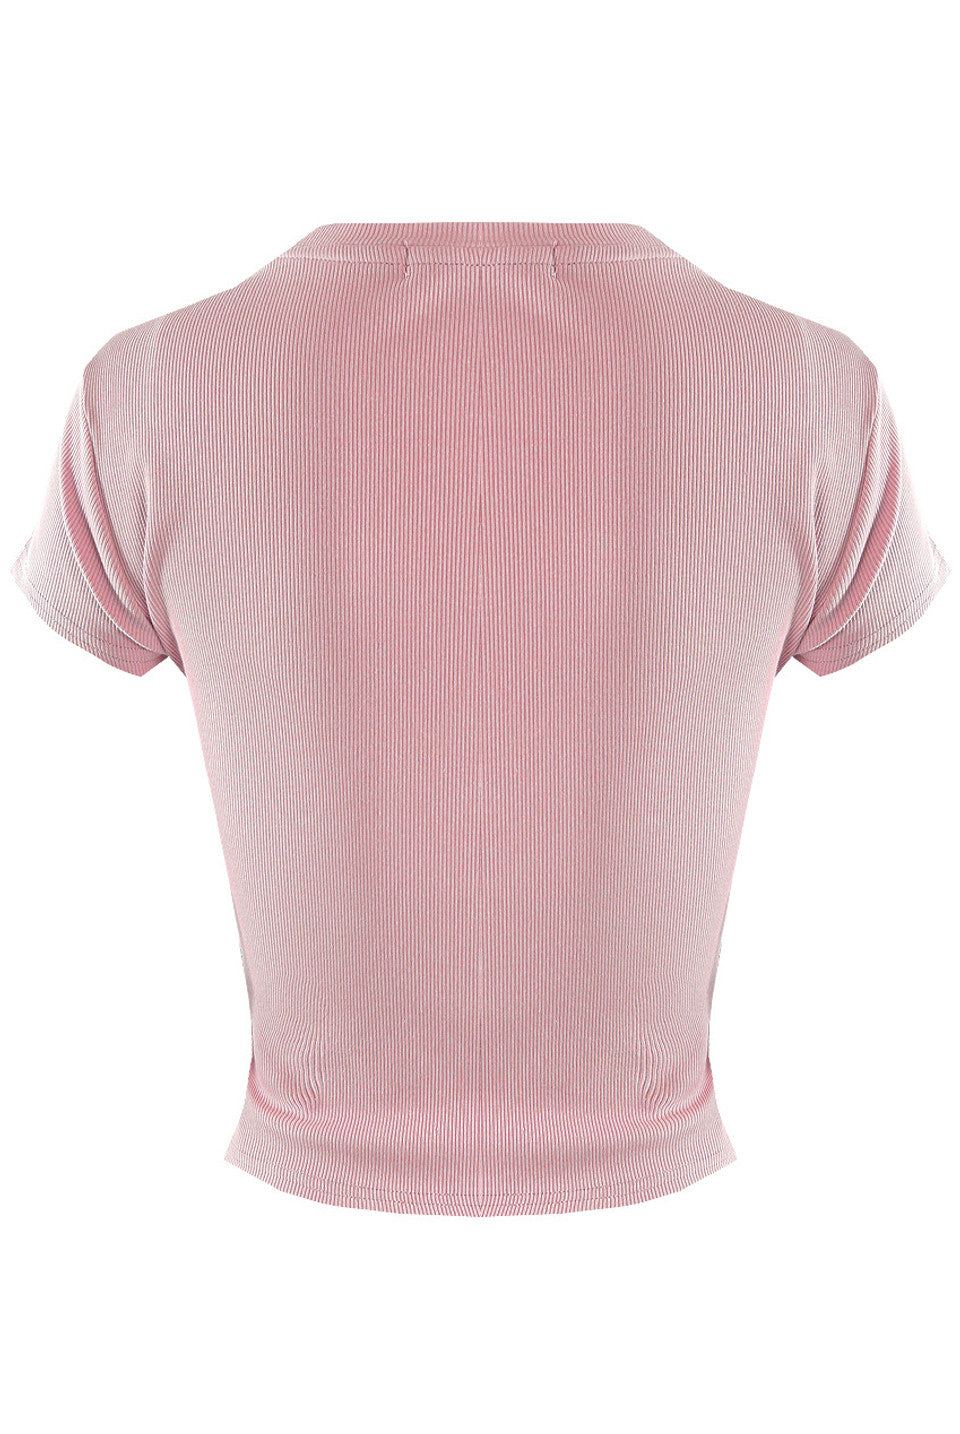 Ribbed Cropped Basic T-Shirt - Pink